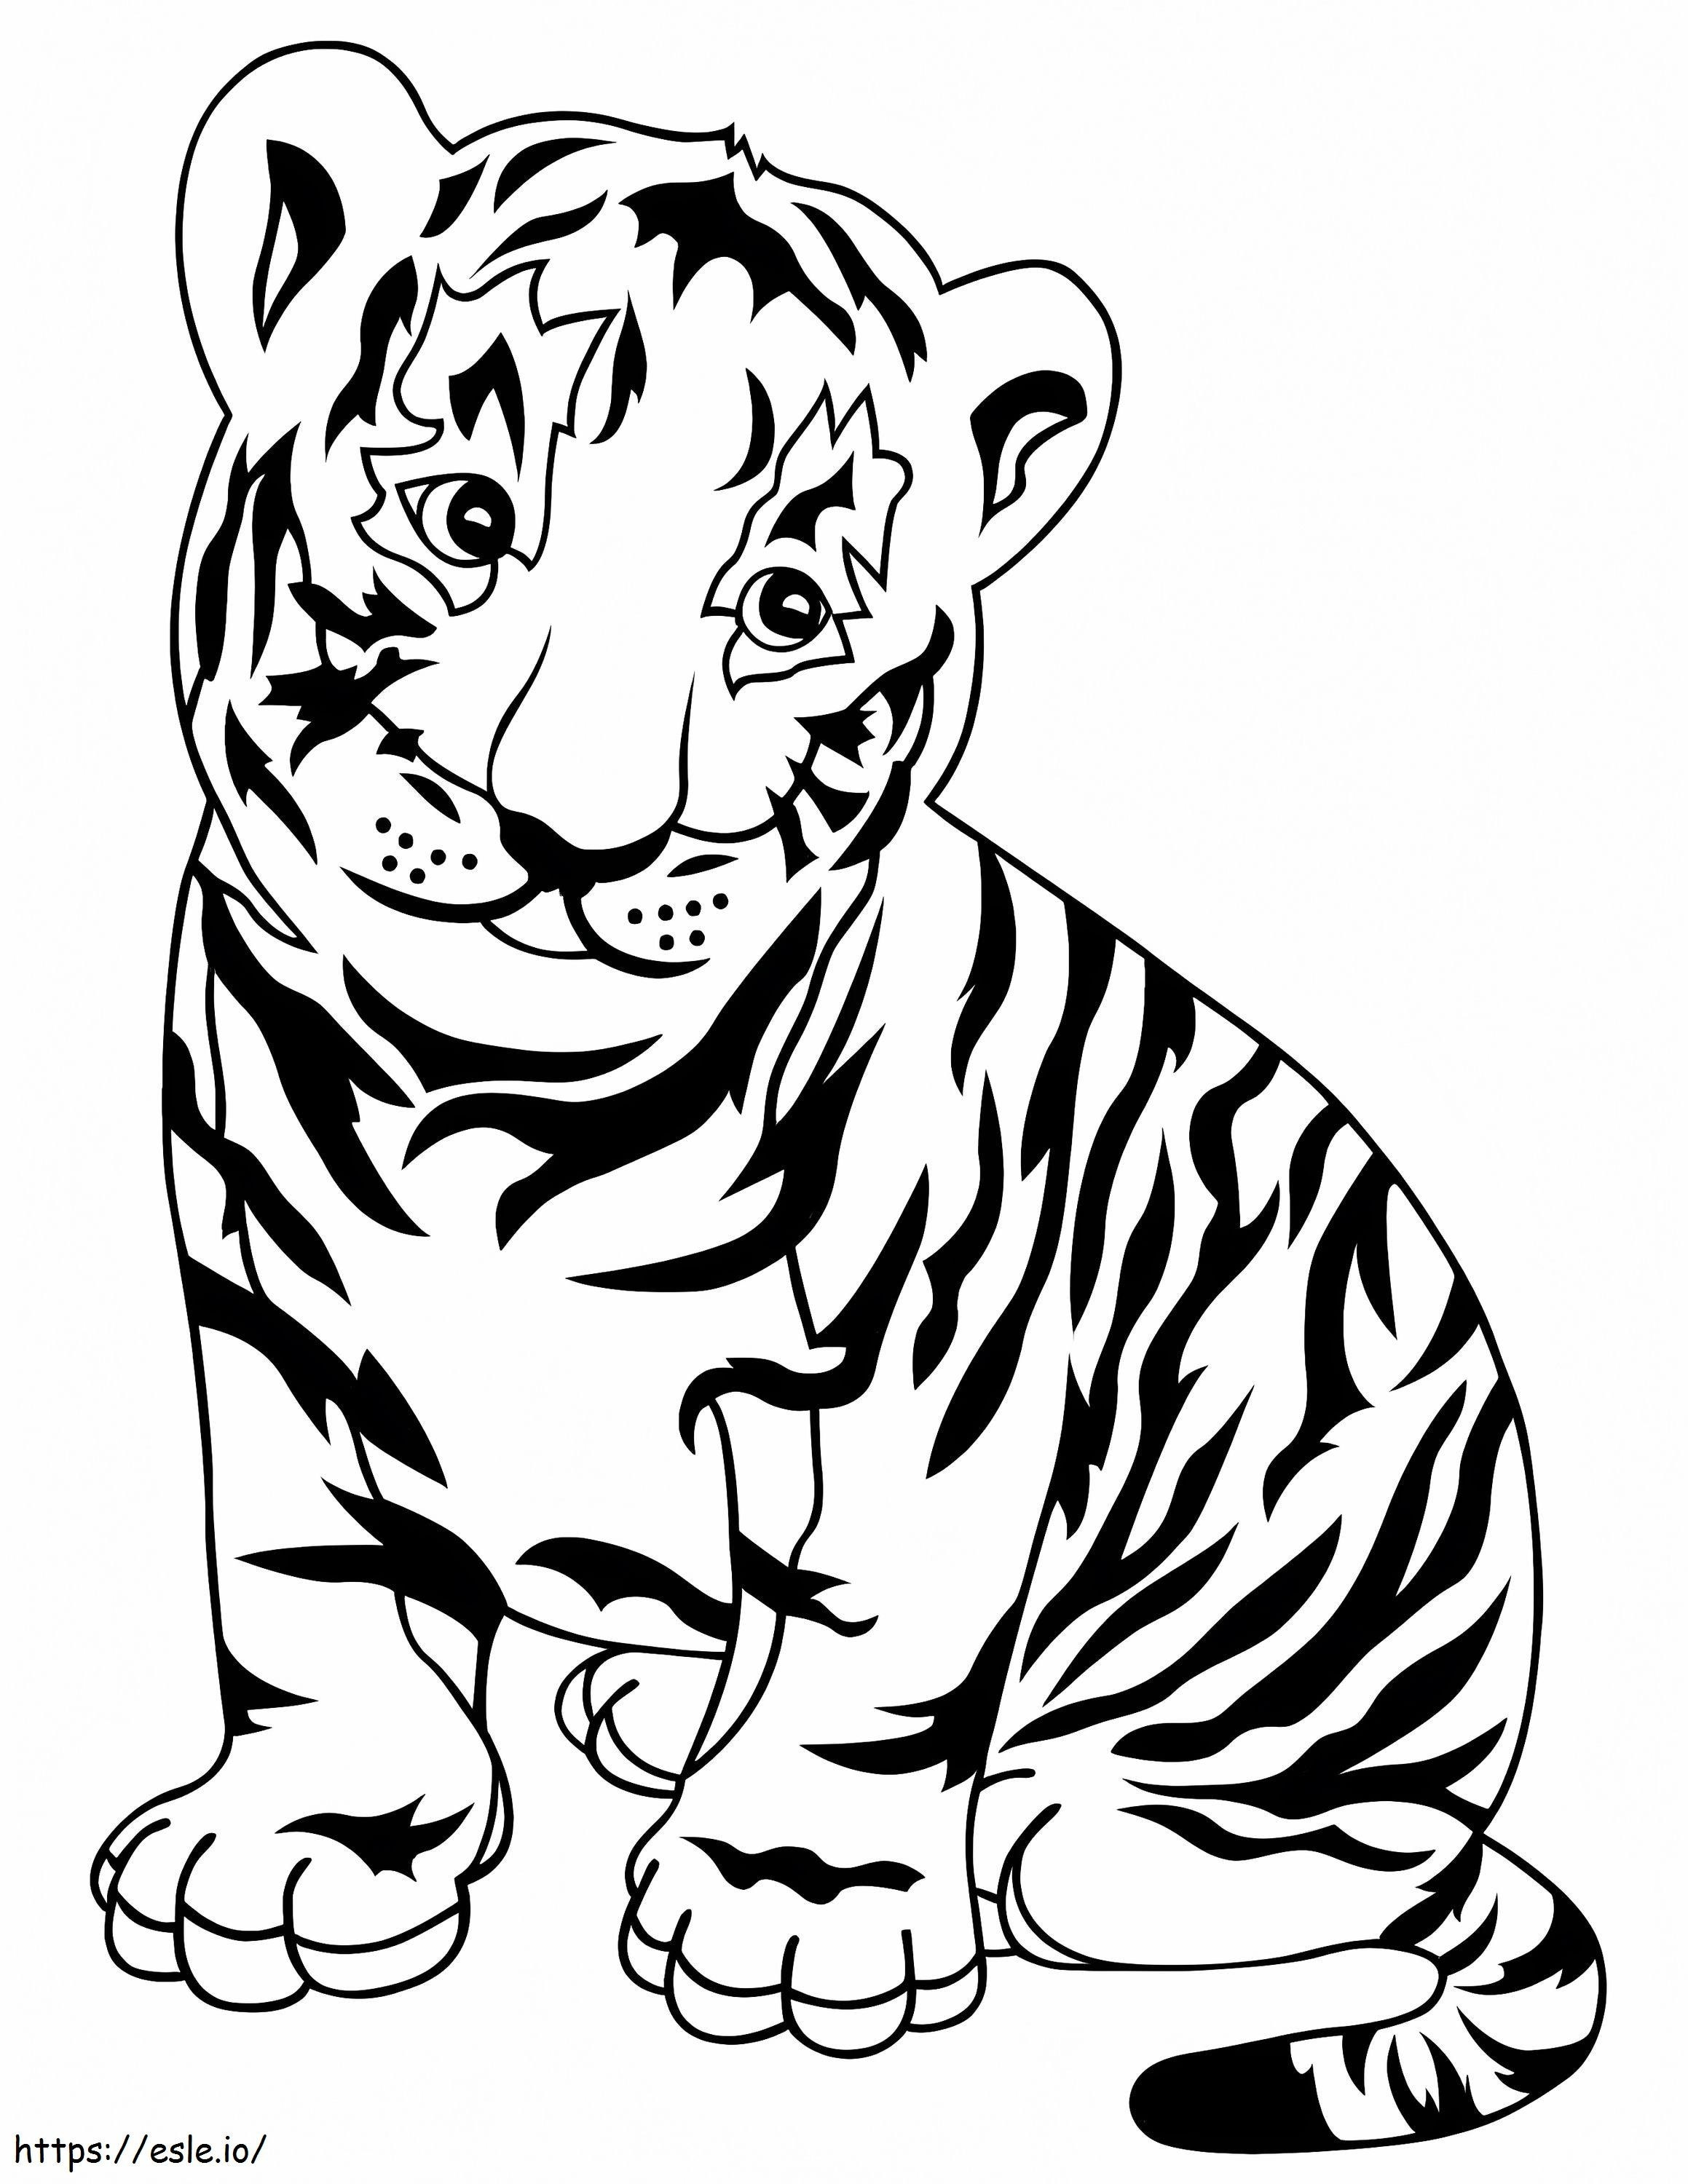 Adorable Baby Tiger coloring page